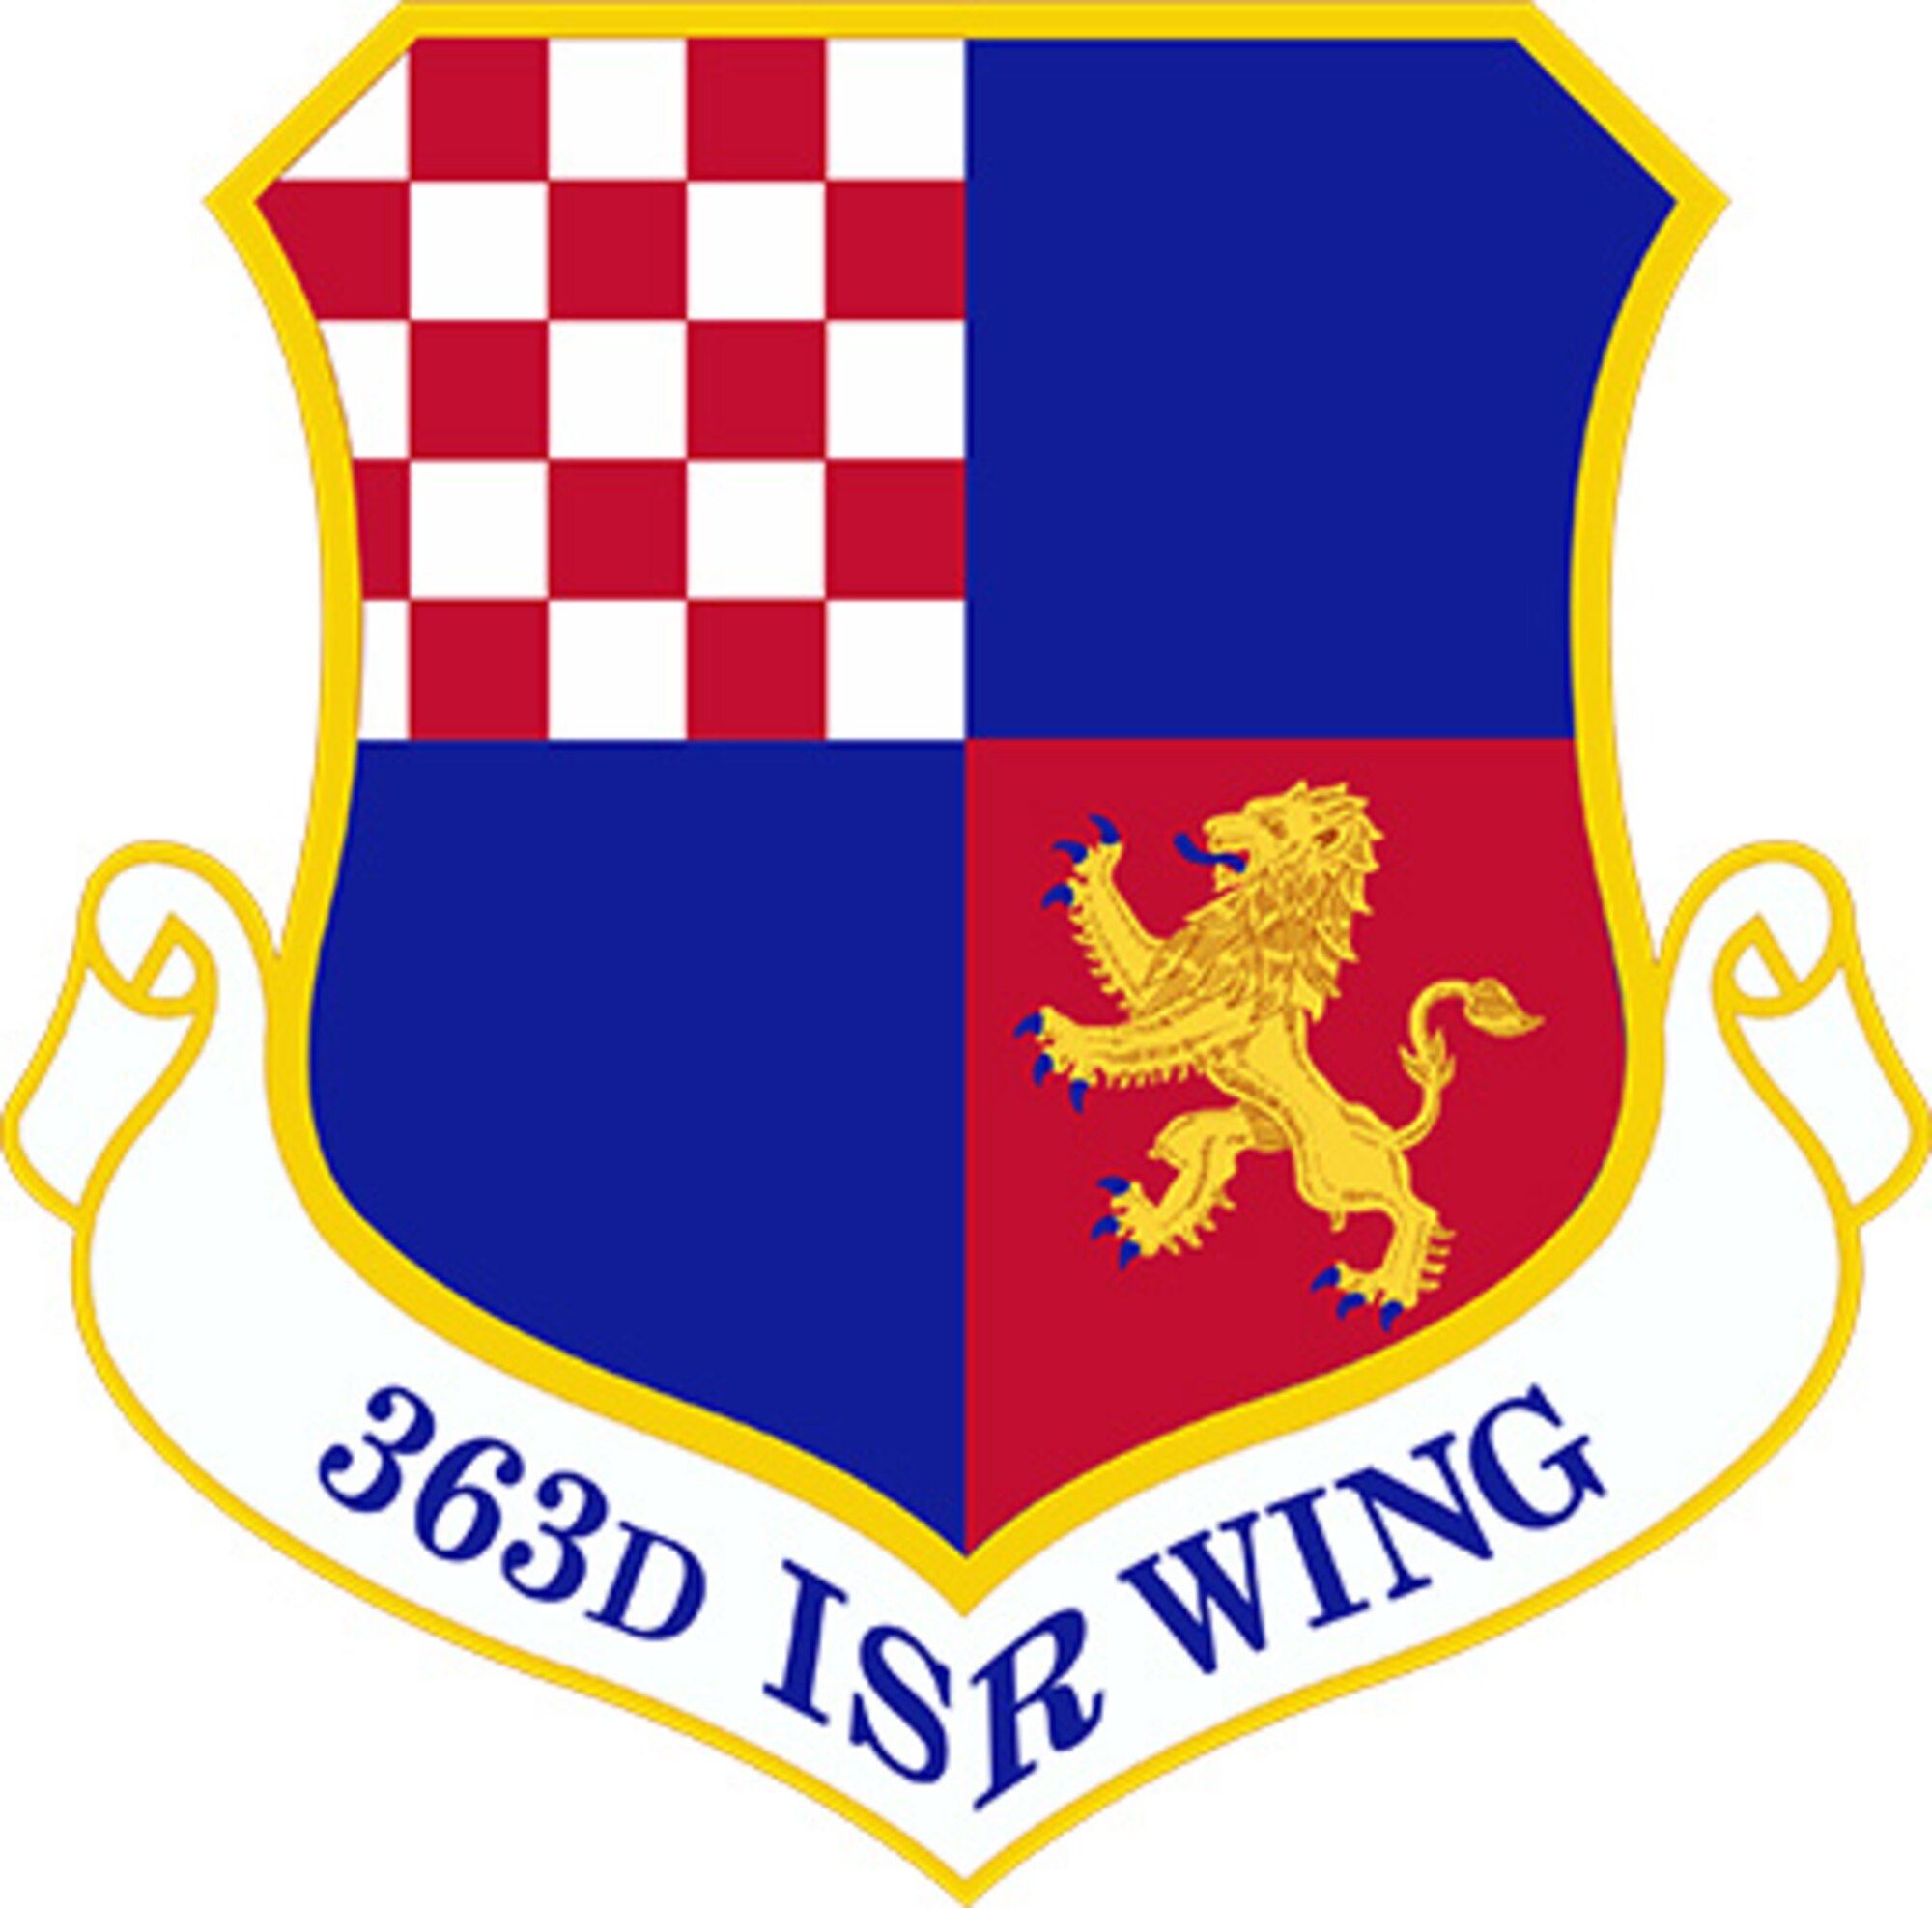 Graphic art for the 363d Intelligence, Surveillance, and Reconnaissance Wing emblem.